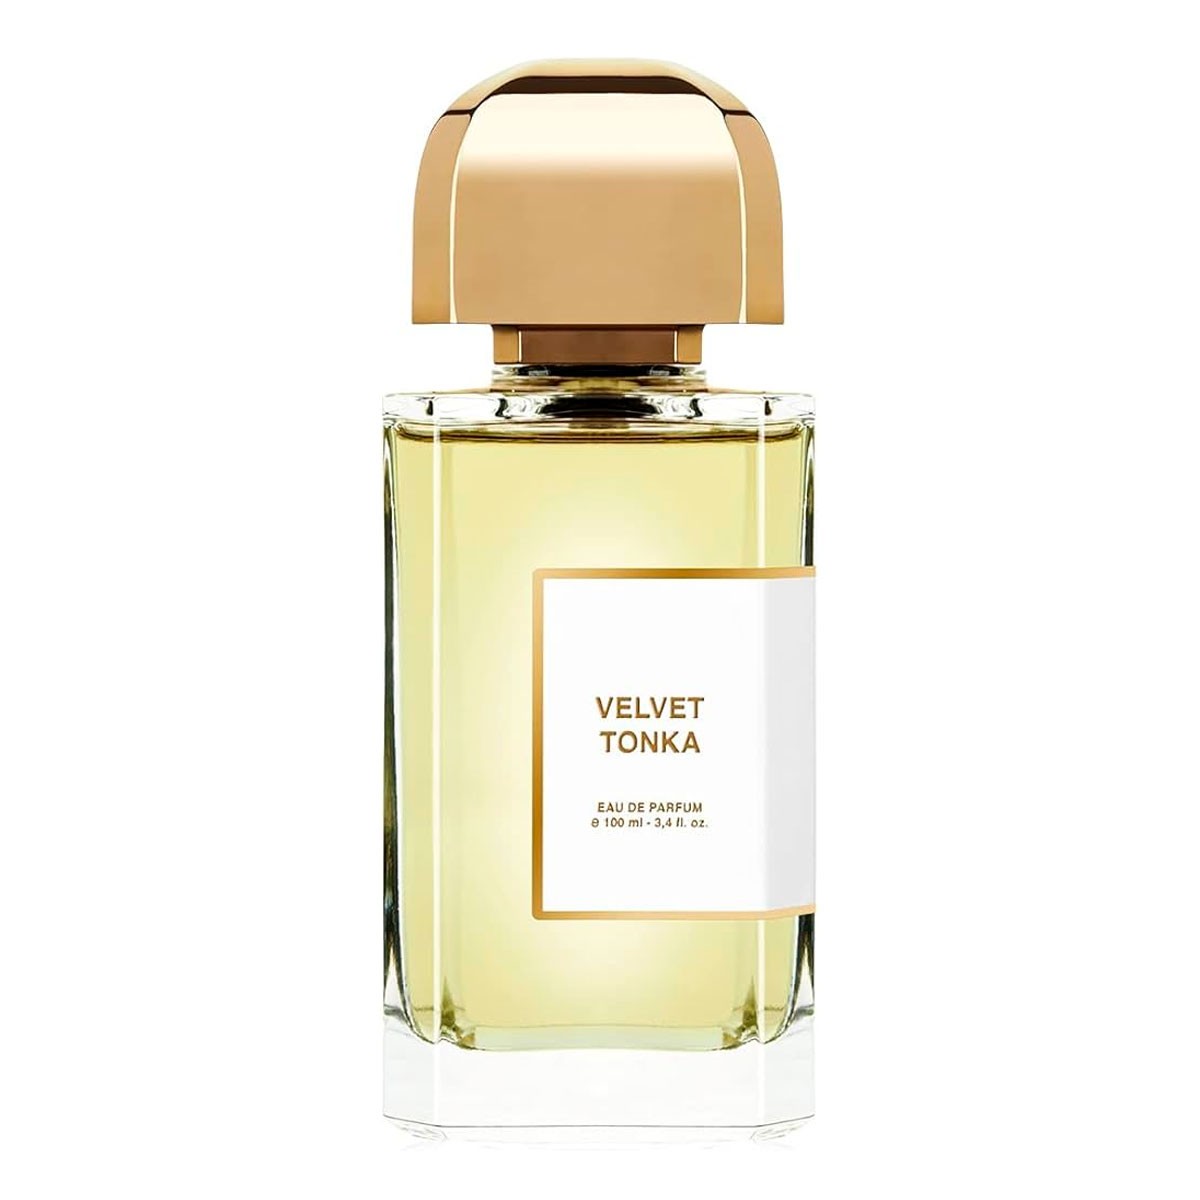 Descubre el perfume nicho Velvet Tonka de BDK Parfums. En exclusiva en jcApotecari.